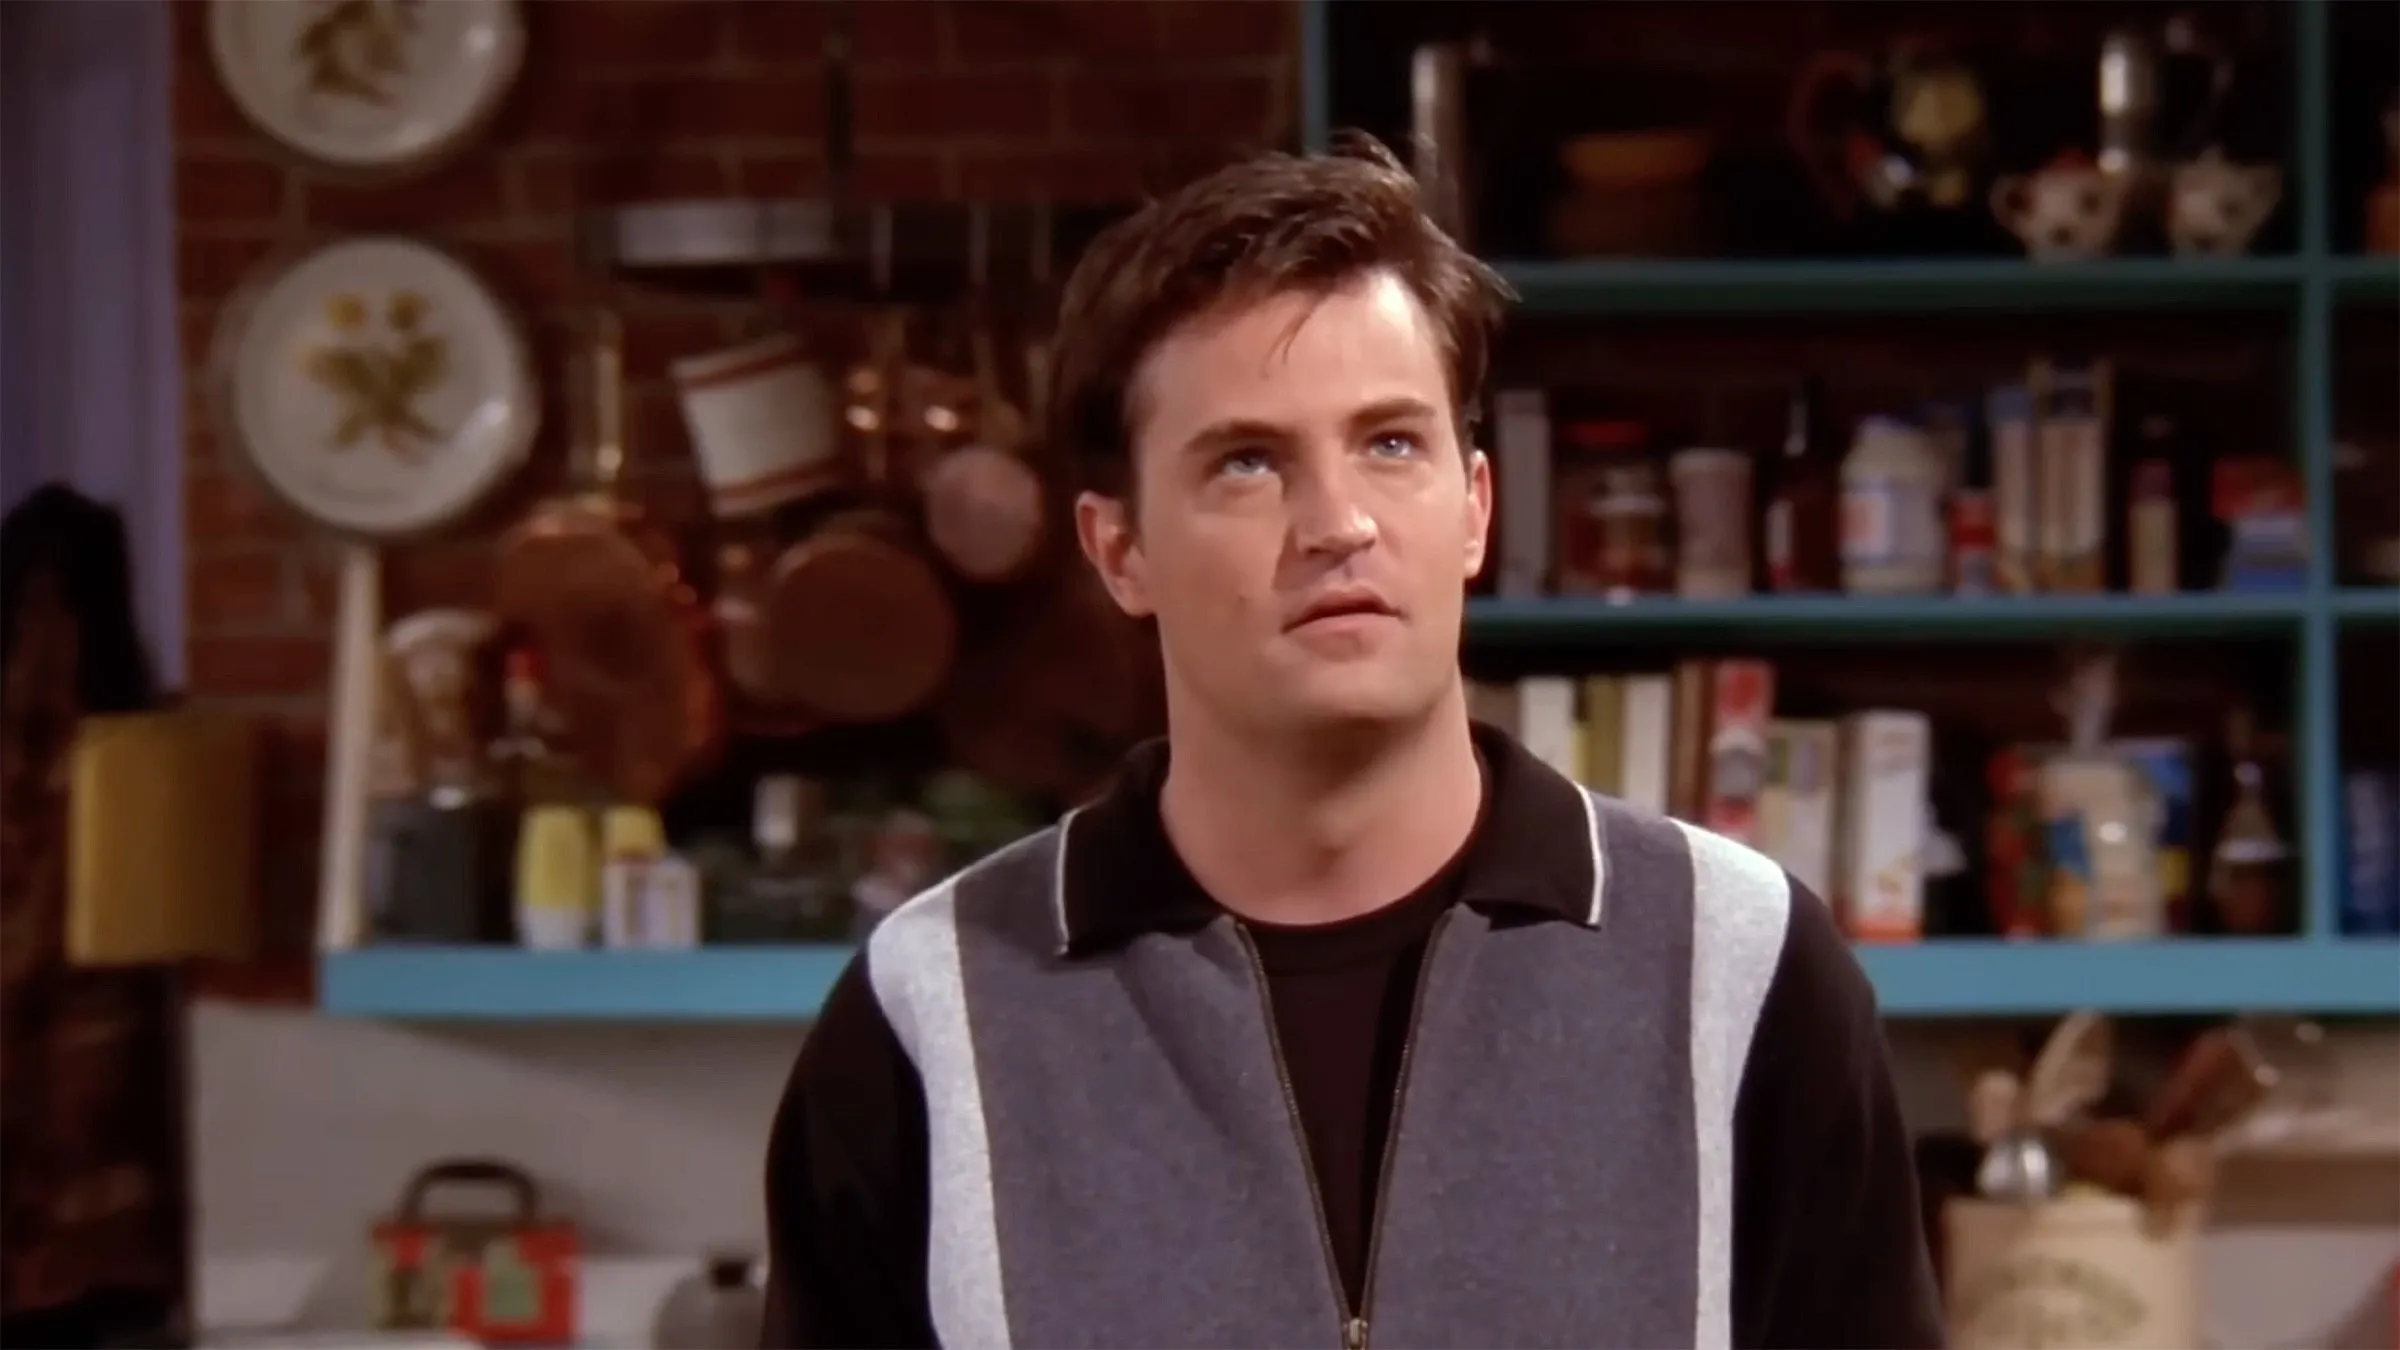 Chandler Bing as performed by Matthew Perry on "Friends." Image: Warner Bros. TV/YouTube